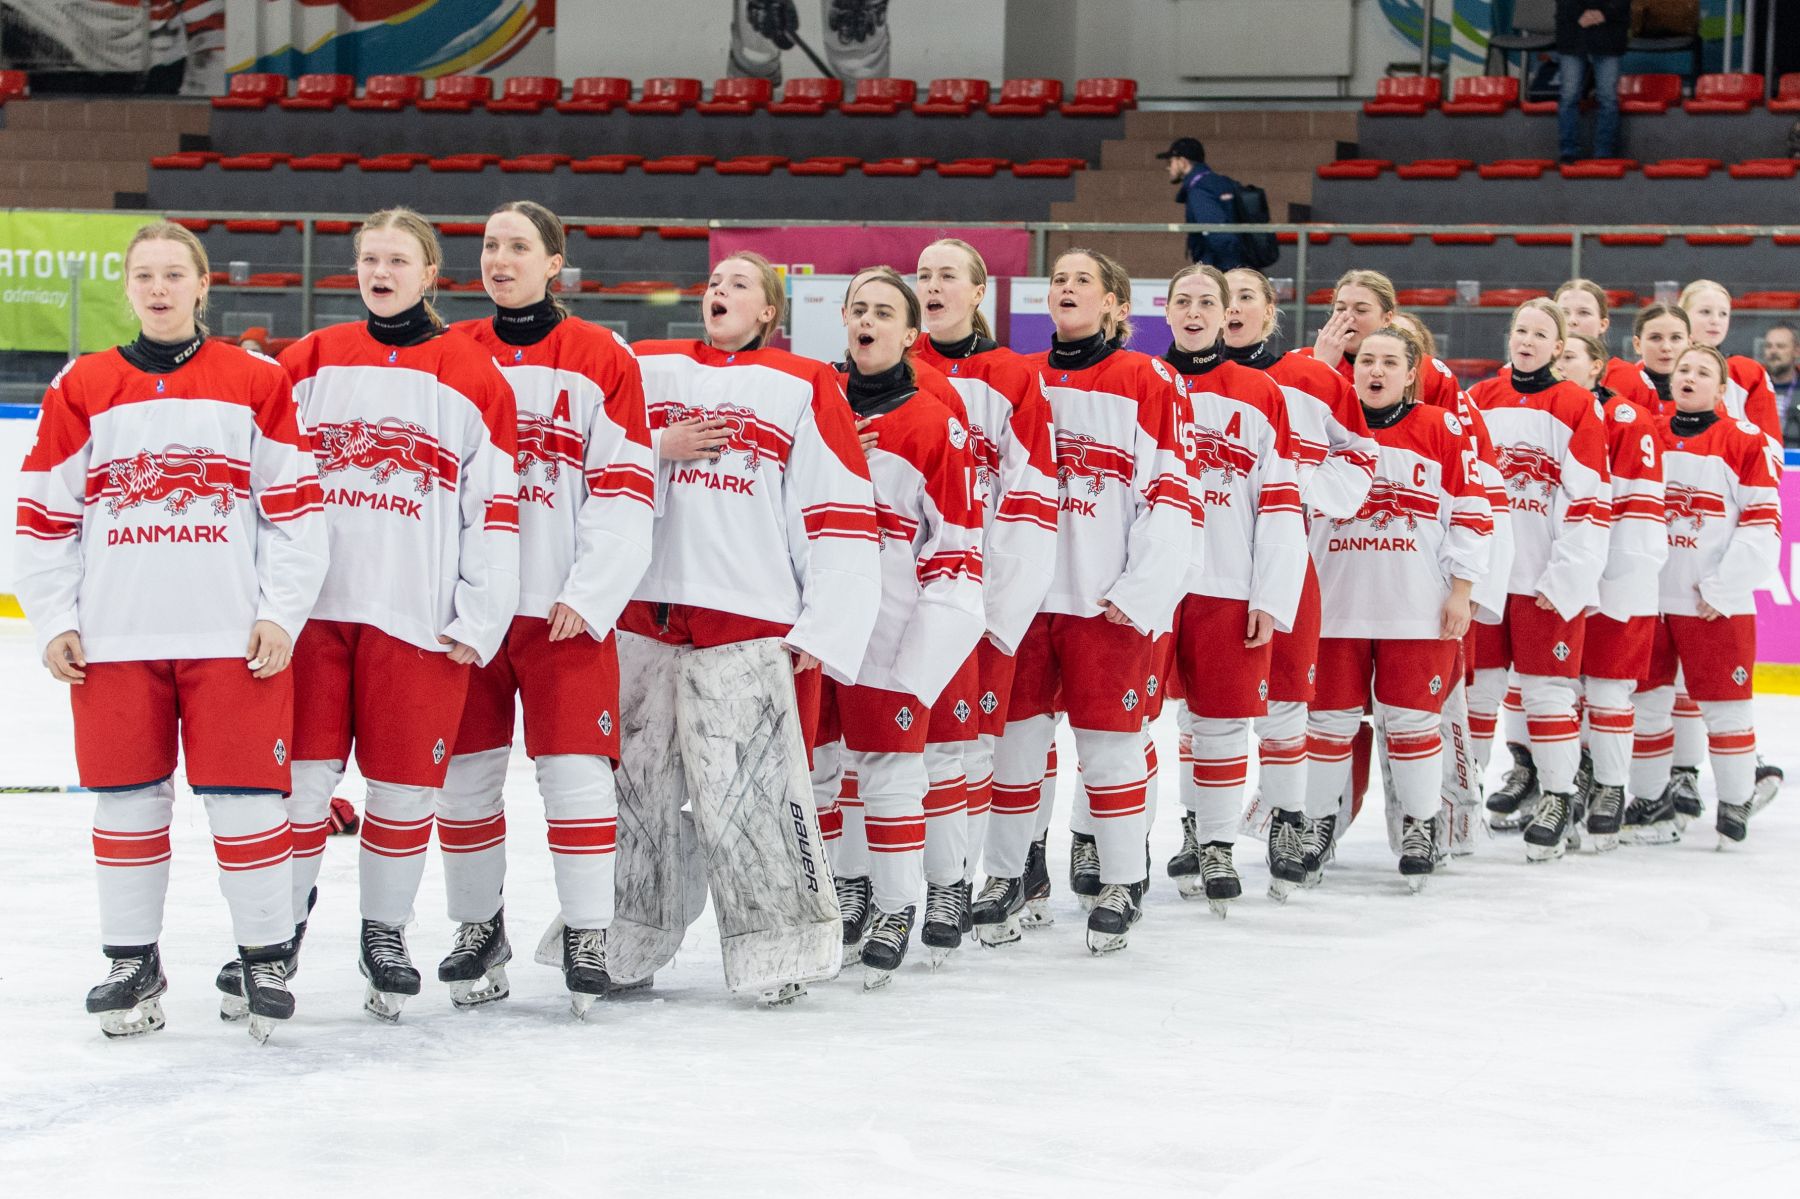 2023 IIHF World Women's U18 Championship - Wikipedia